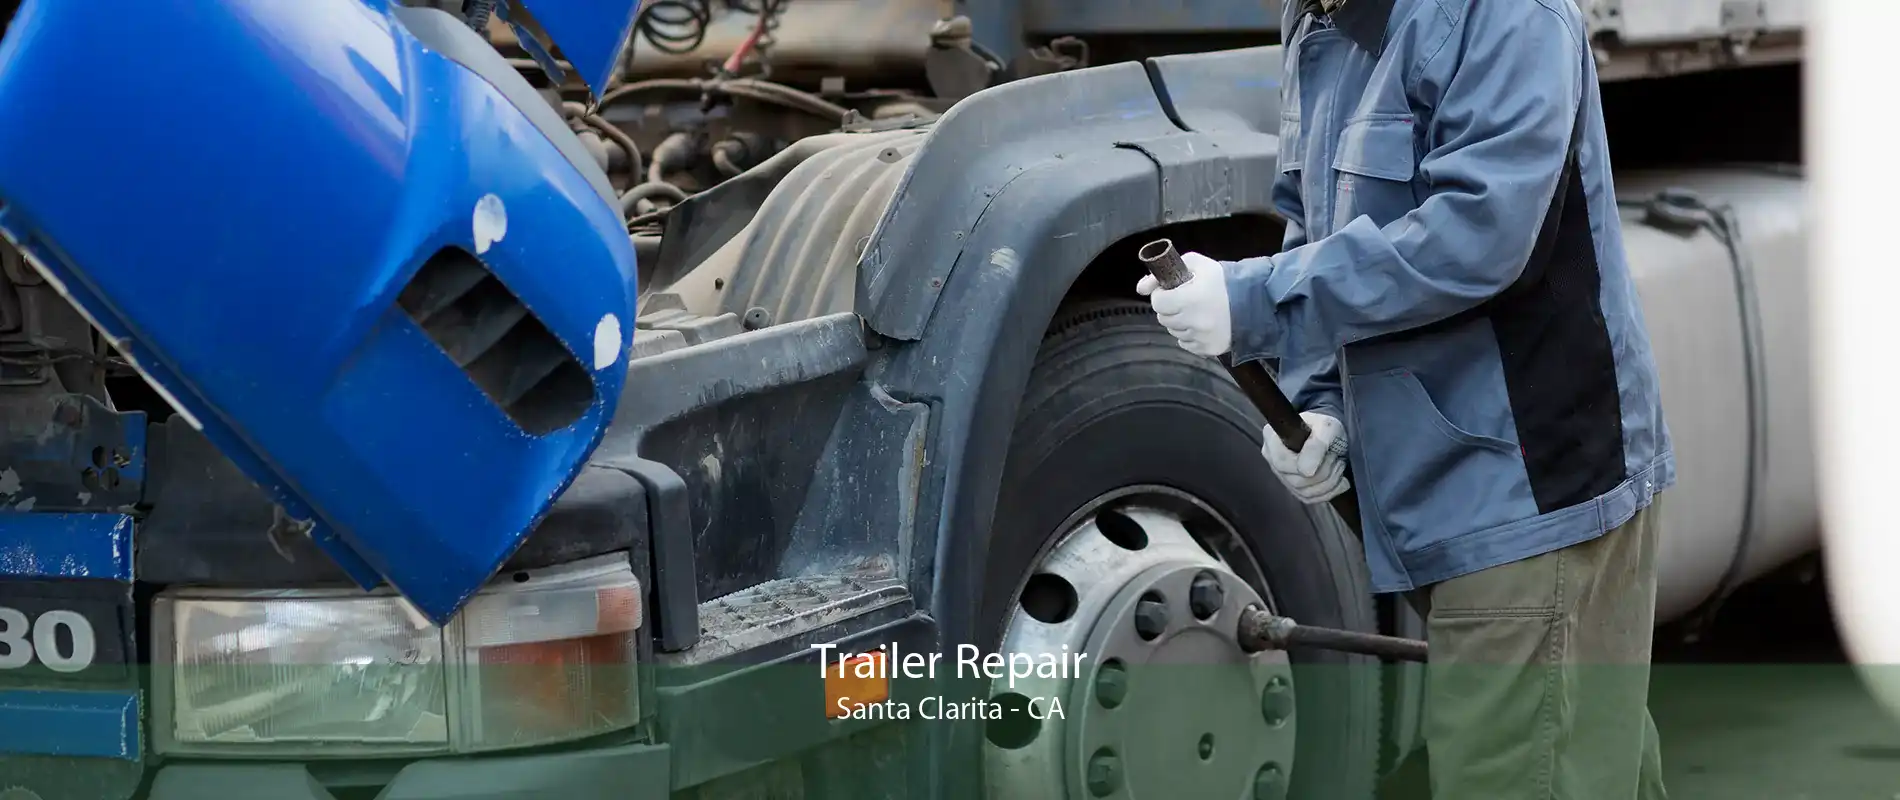 Trailer Repair Santa Clarita - CA